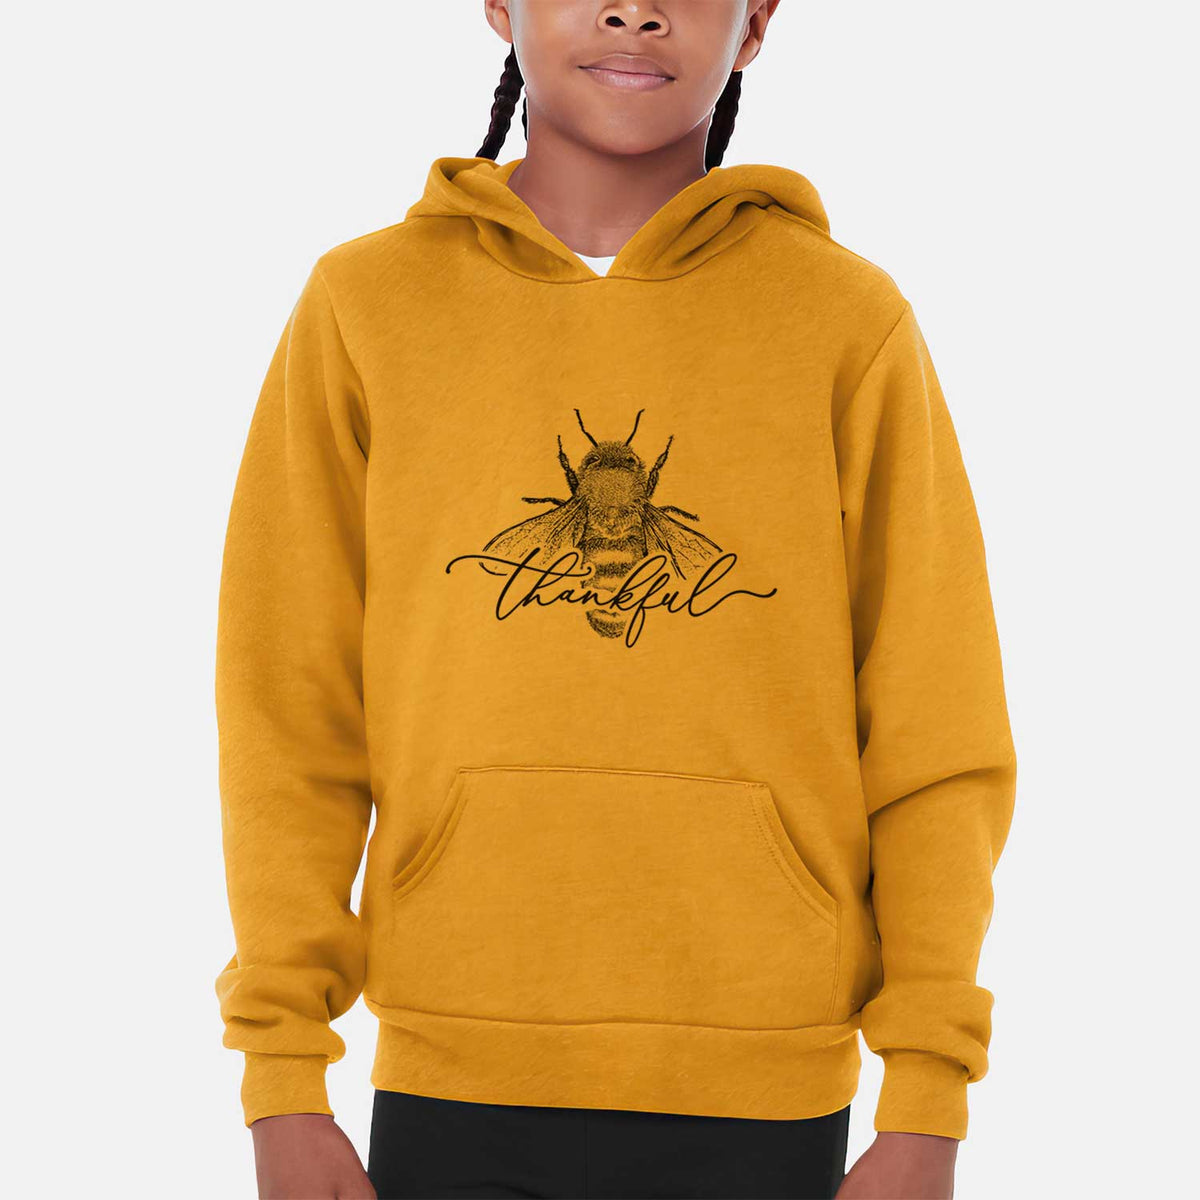 Bee Thankful - Youth Hoodie Sweatshirt